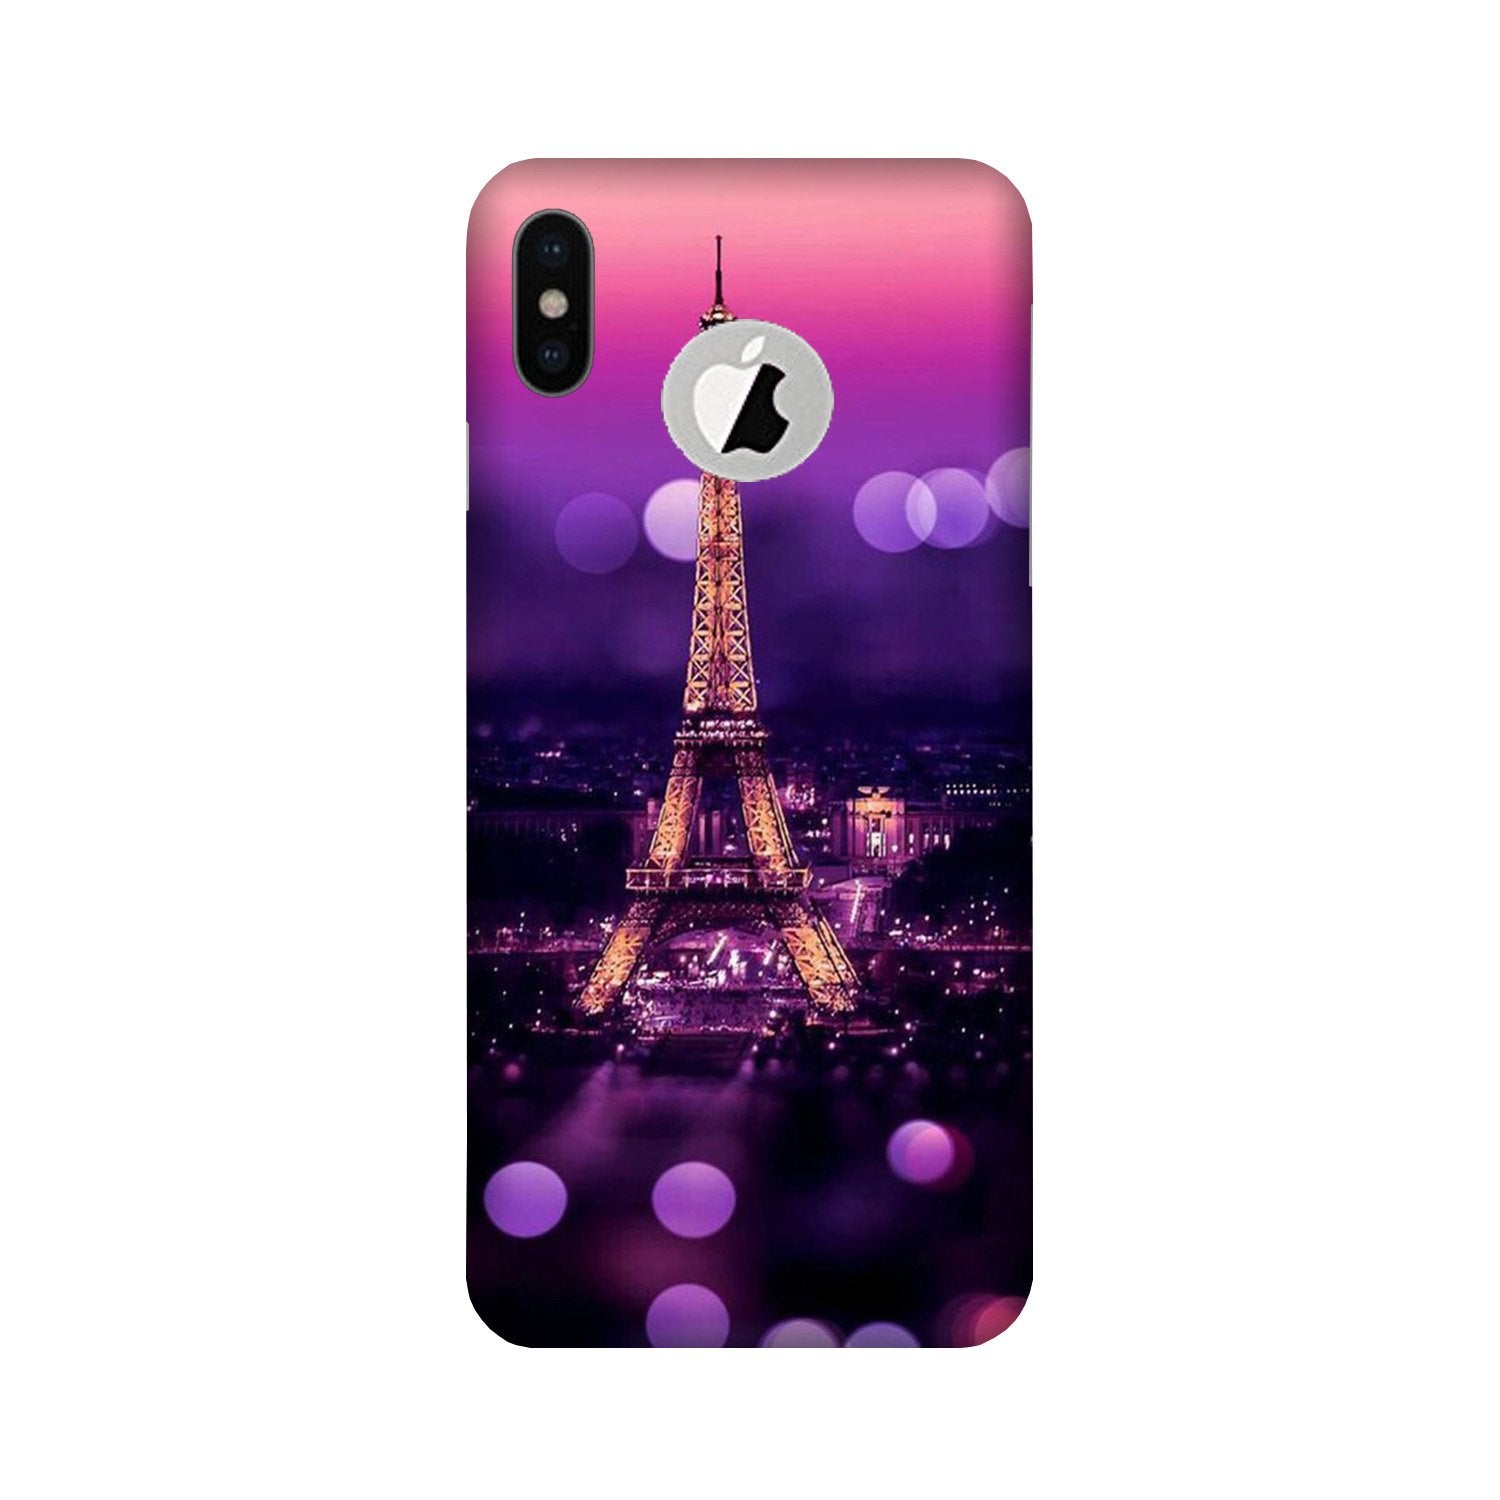 Eiffel Tower Case for iPhone X logo cut